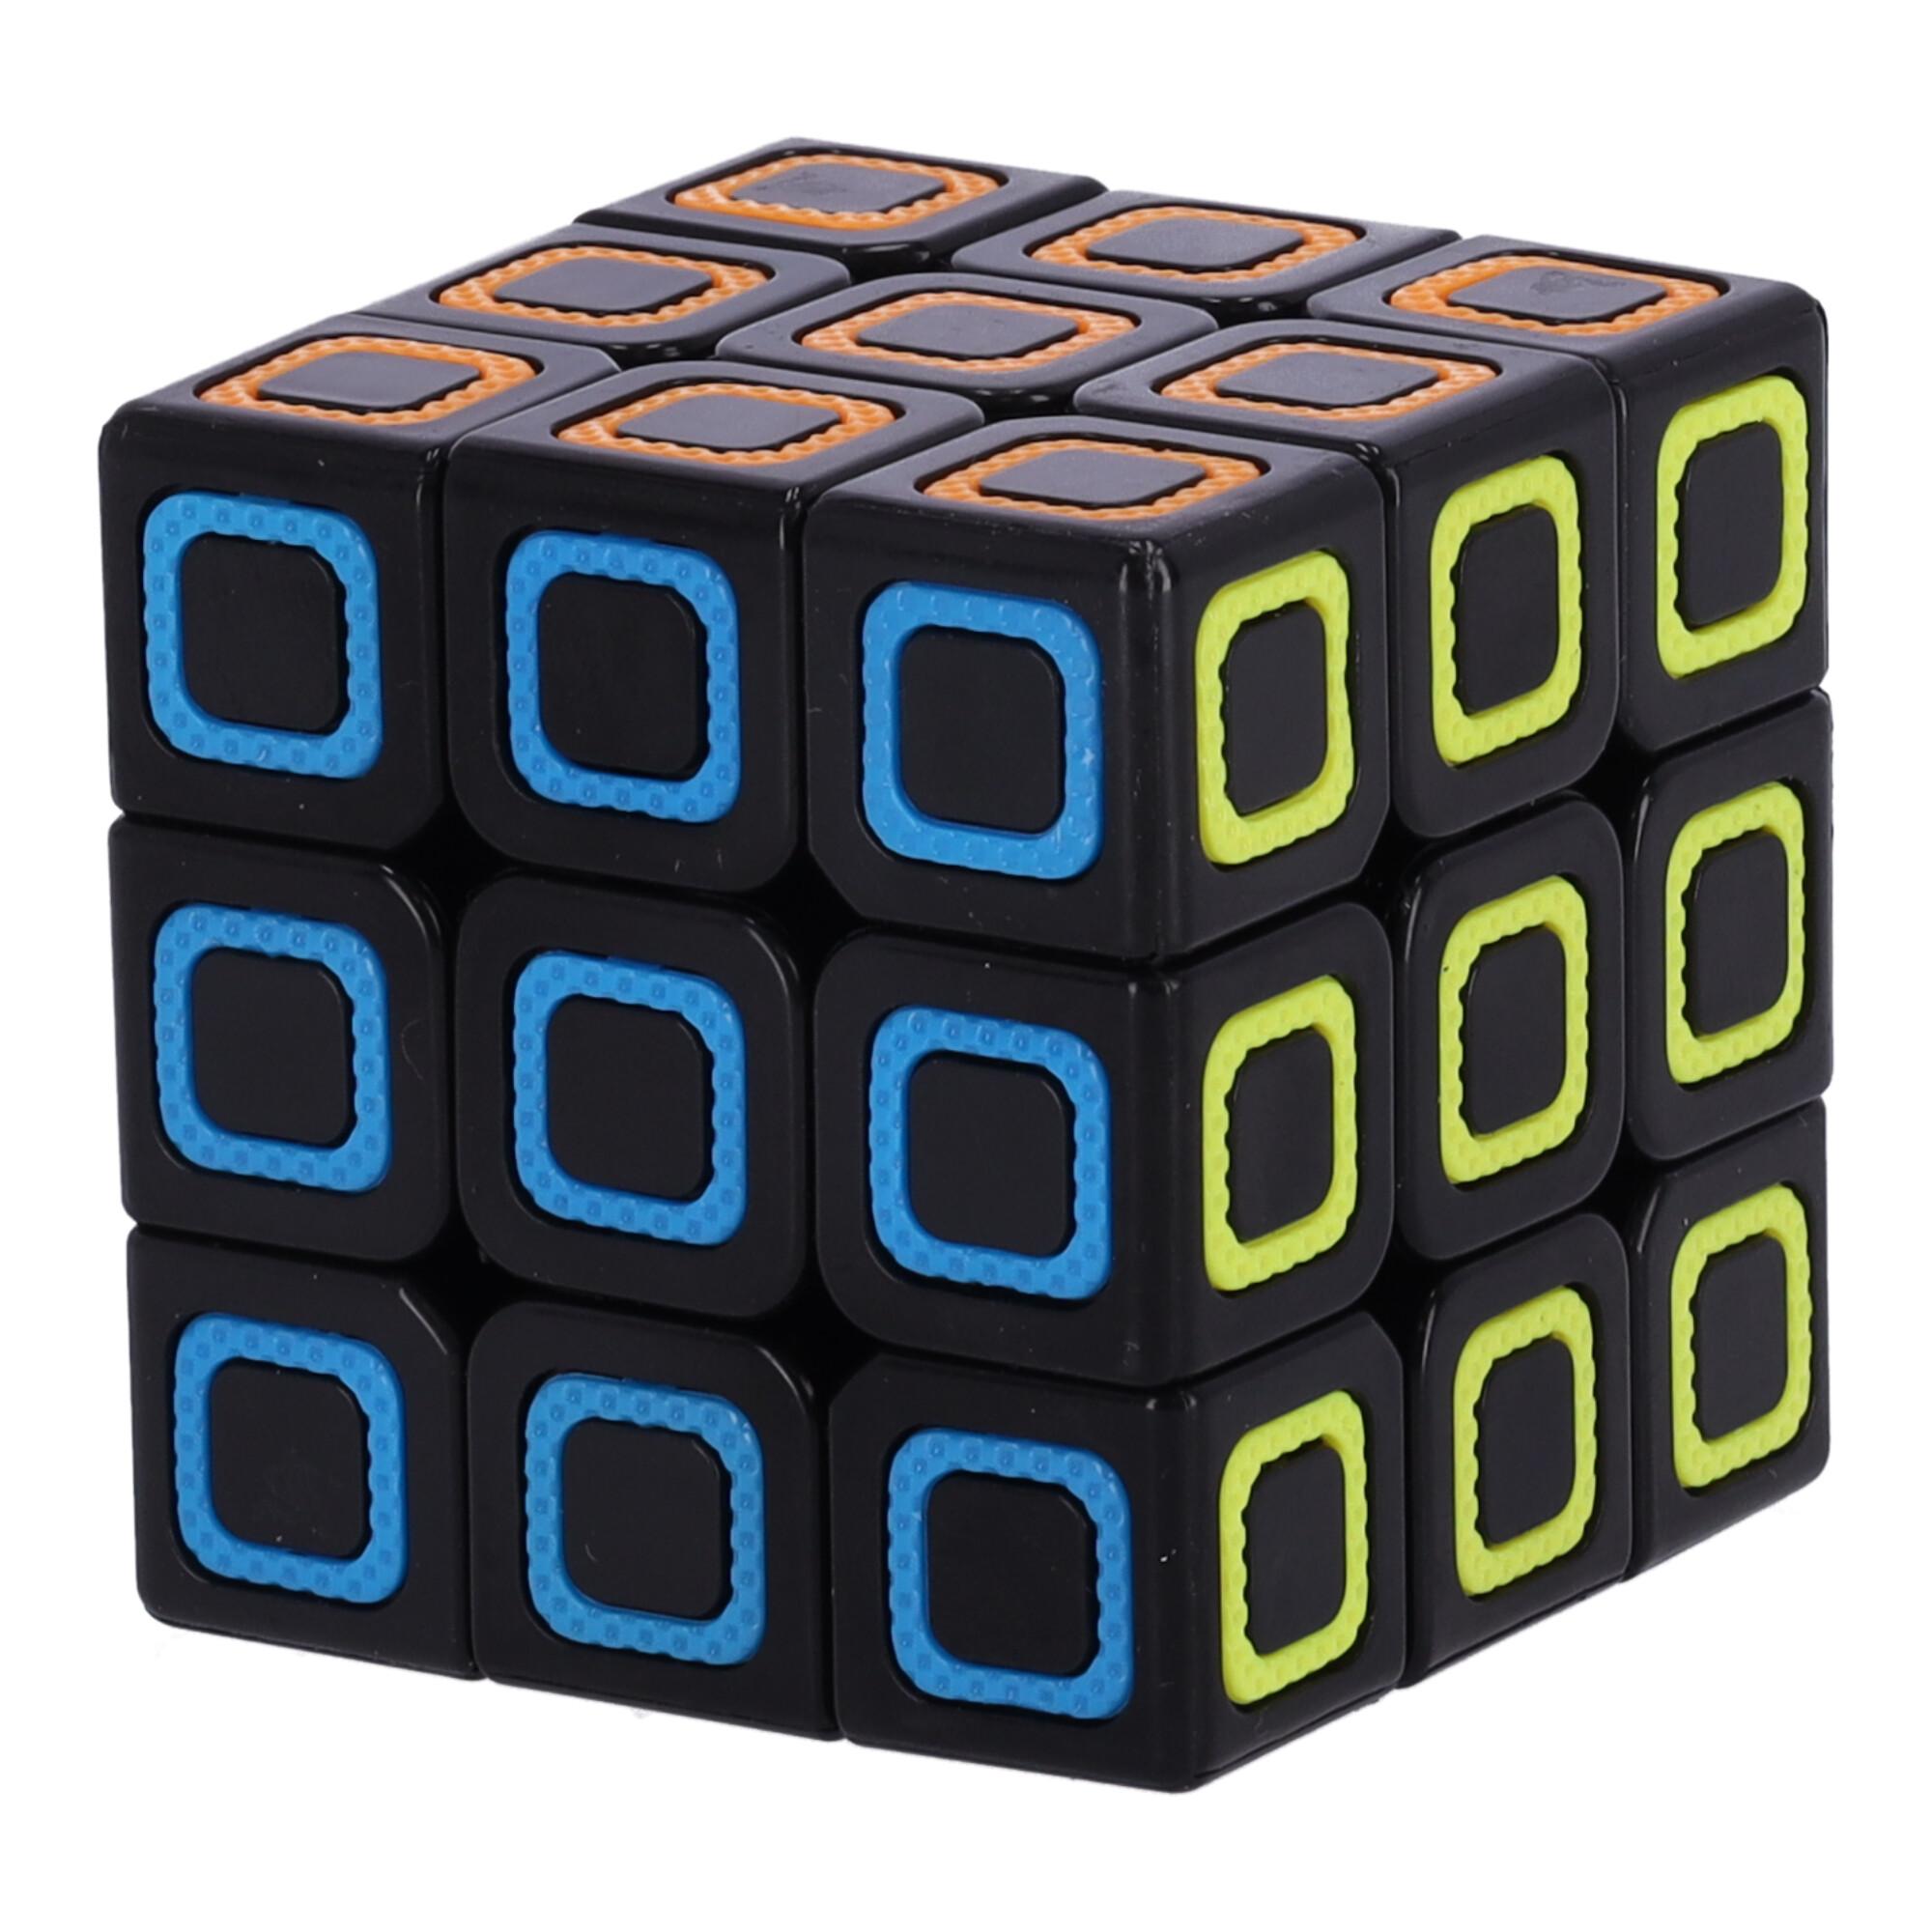 Modern puzzle, logic cube, Rubik's Cube - type VIII